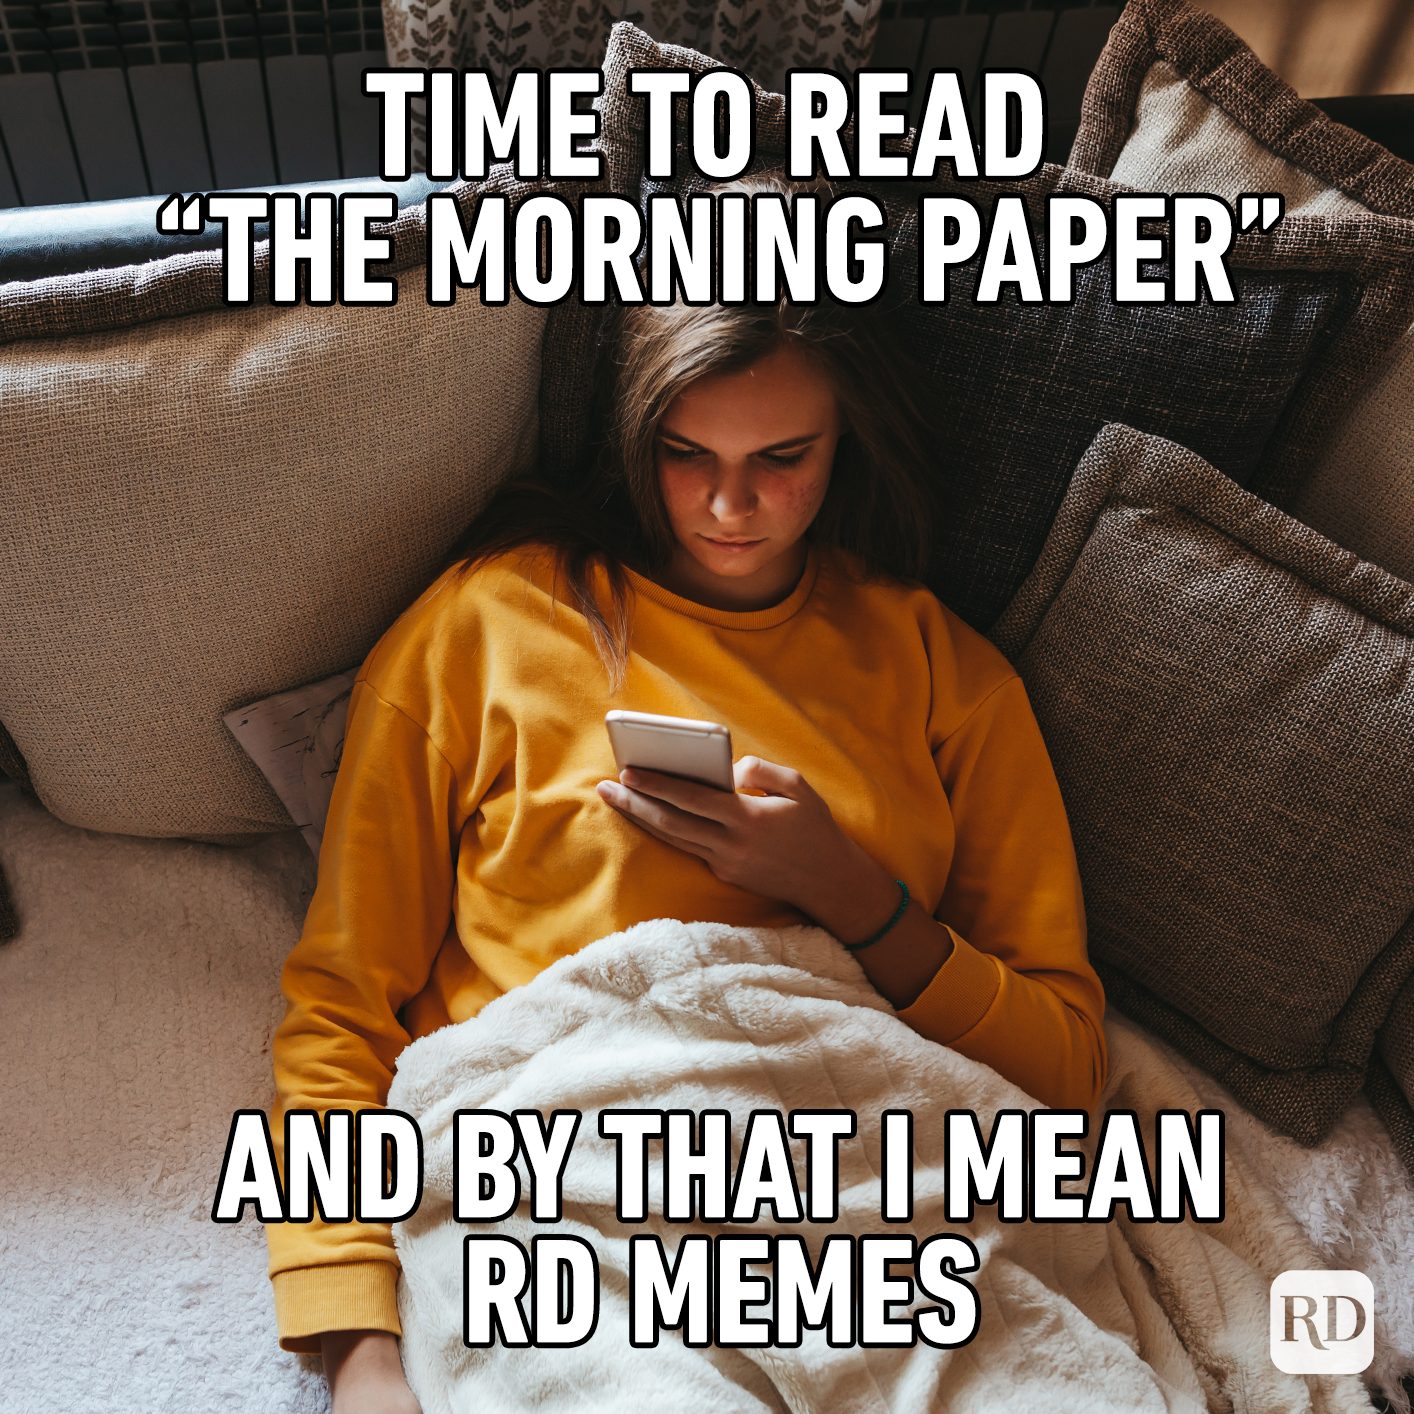 25 Good Morning Memes for Good Laughs | Reader's Digest